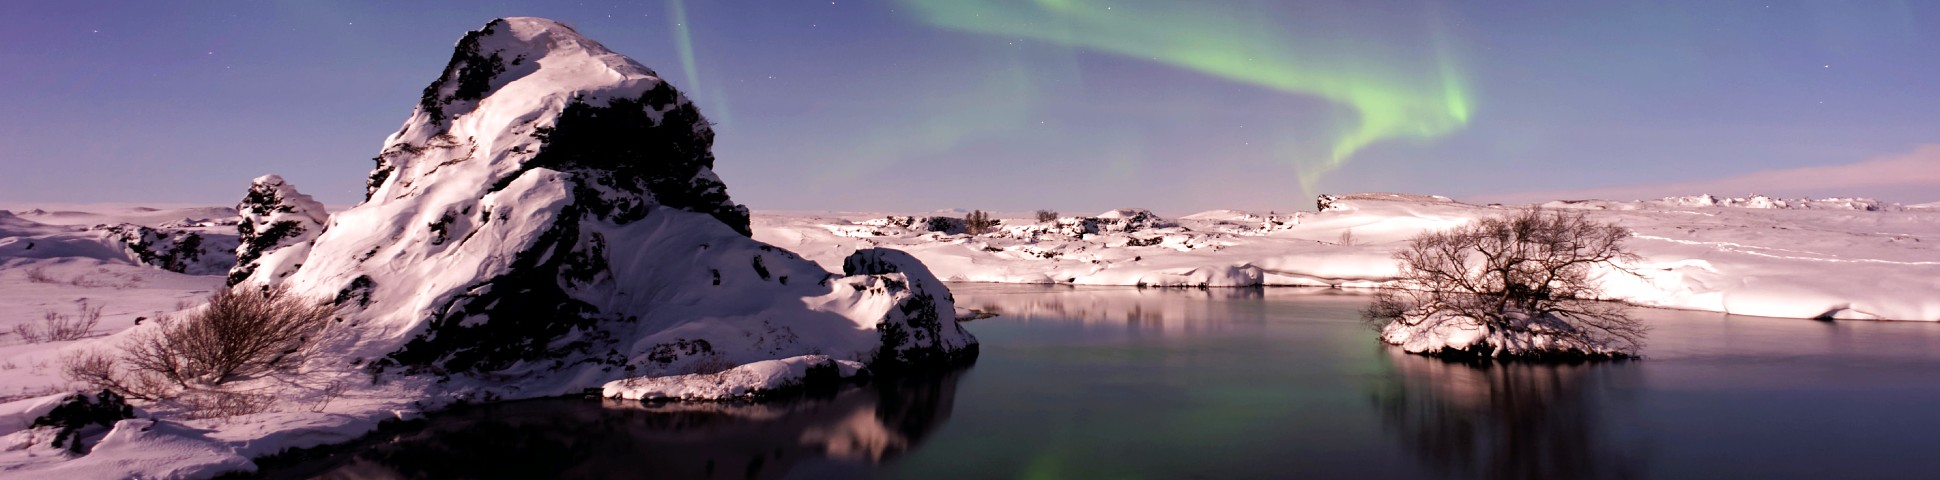 Northern Lights at Northern Iceland (Mývatn)